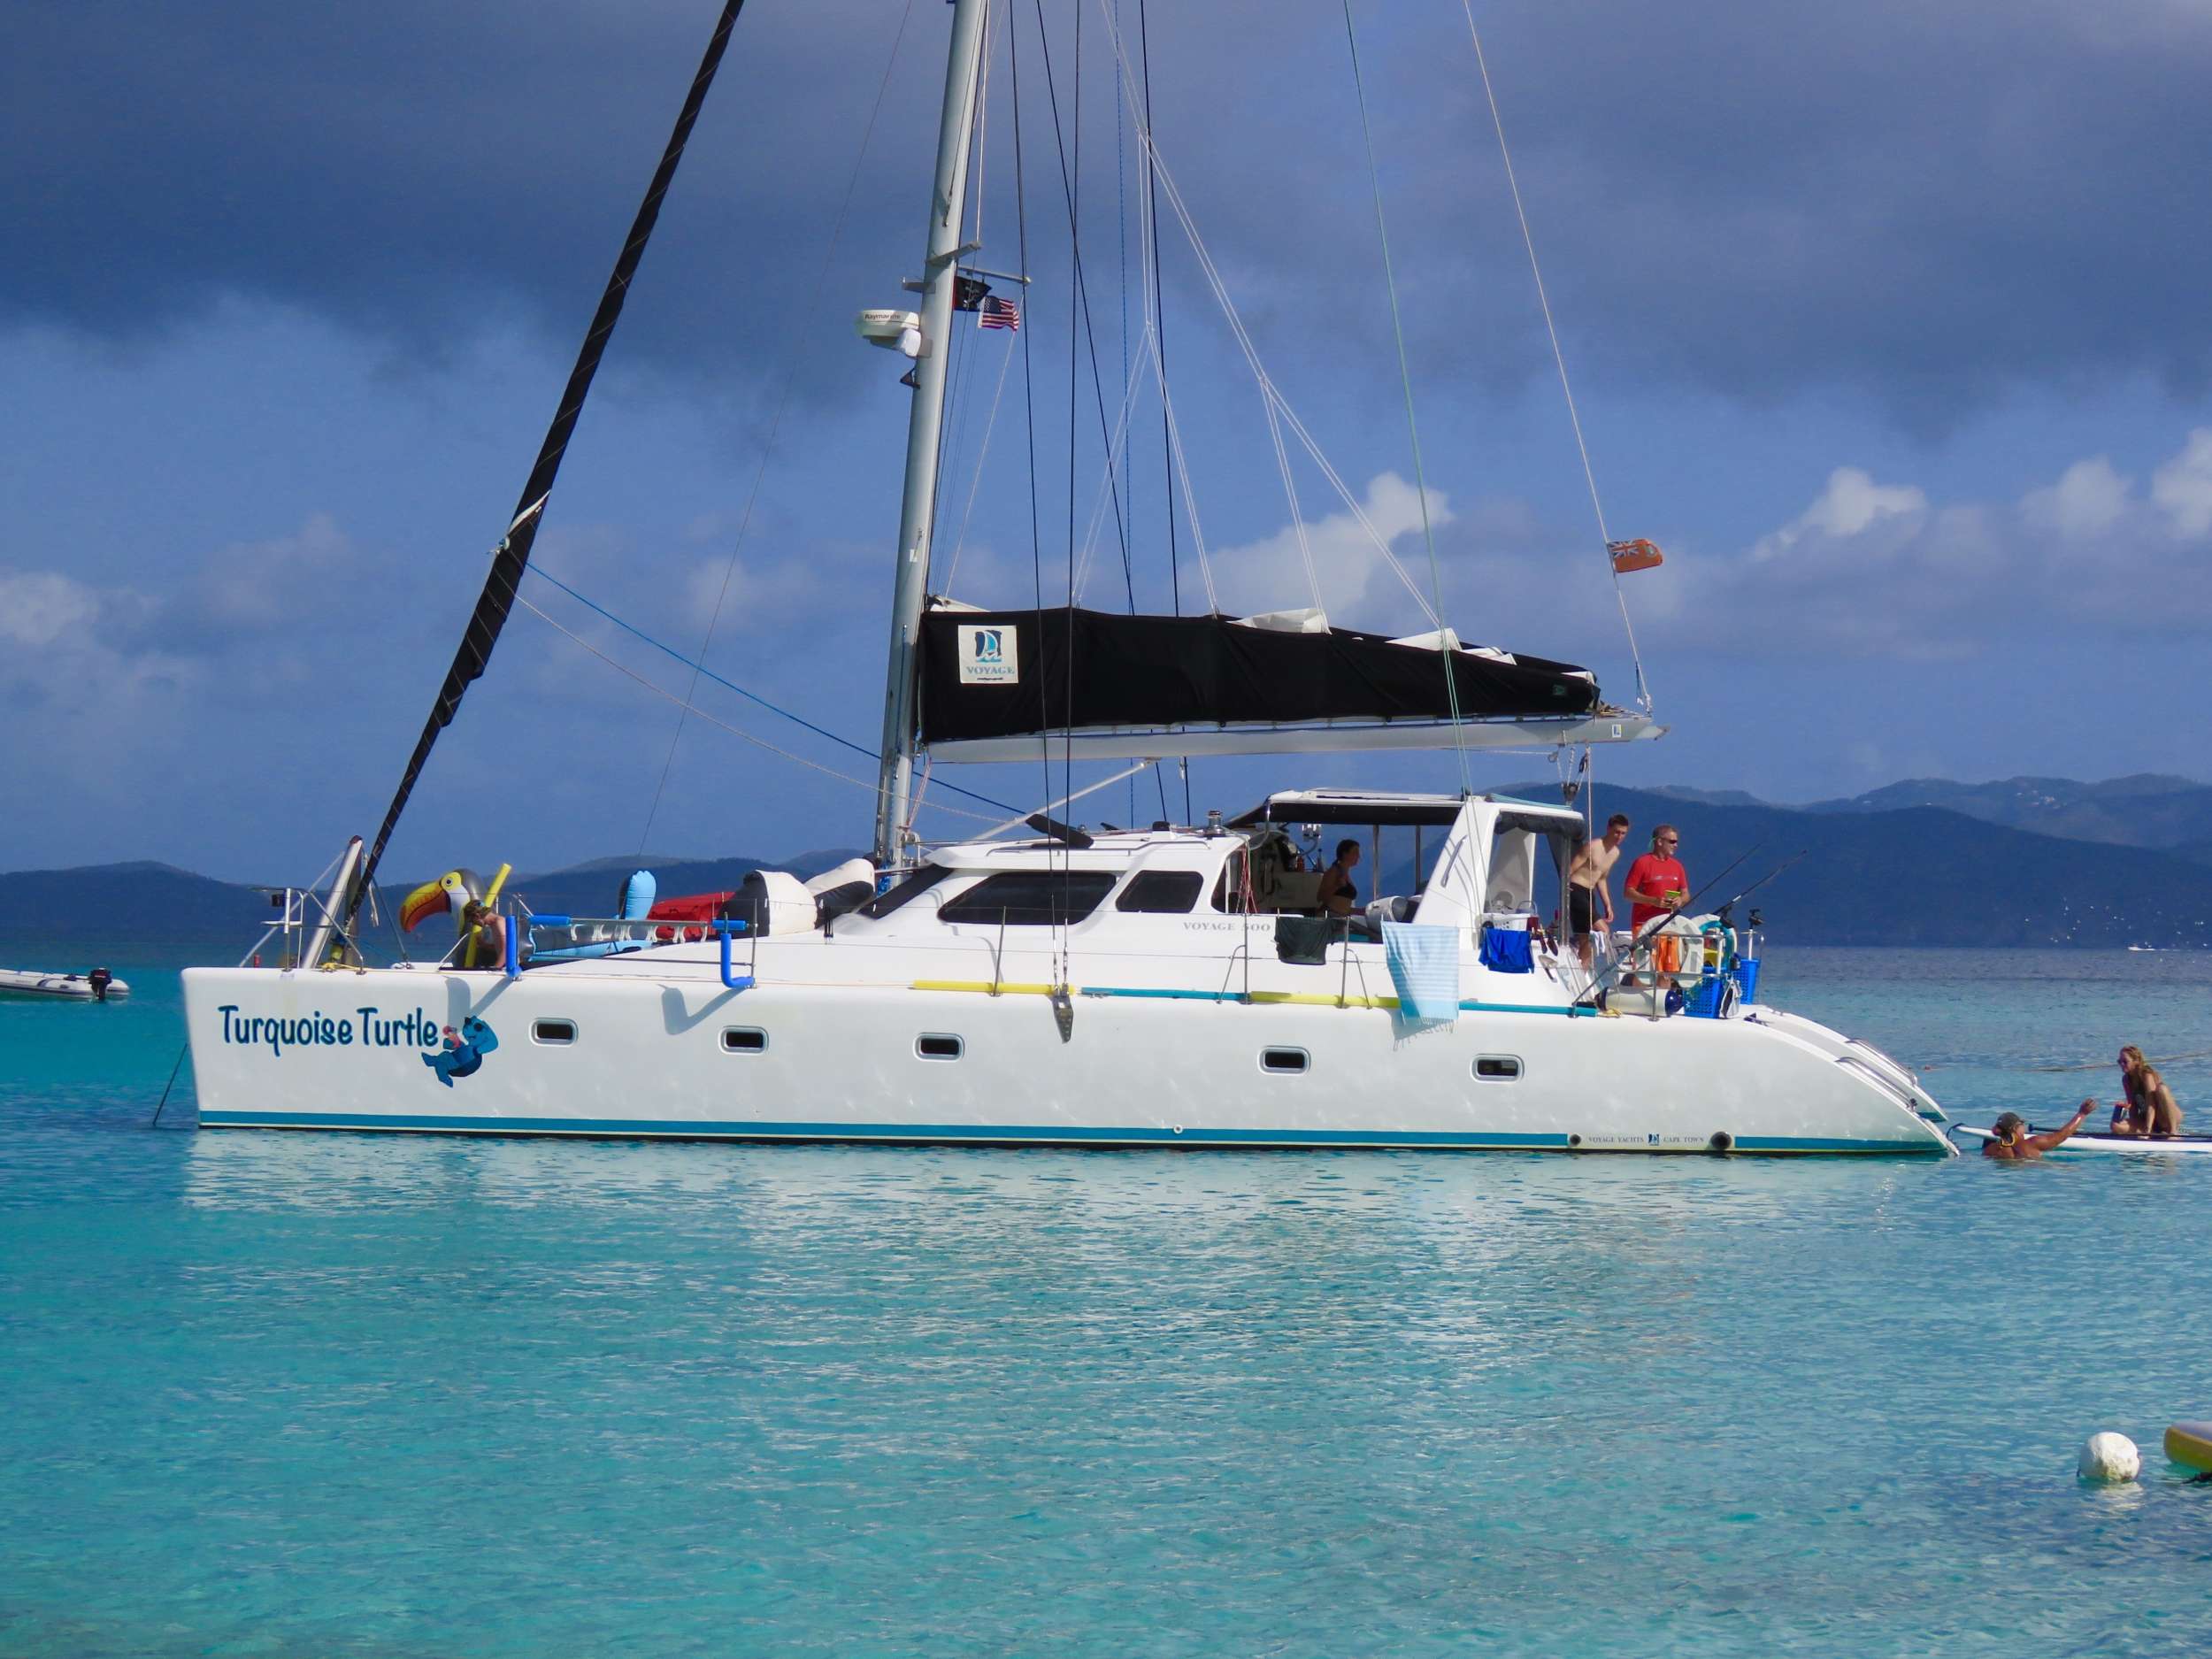 Turquoise Turtle Crewed Voyage 500 Catamaran Charters Sailing the BVI.